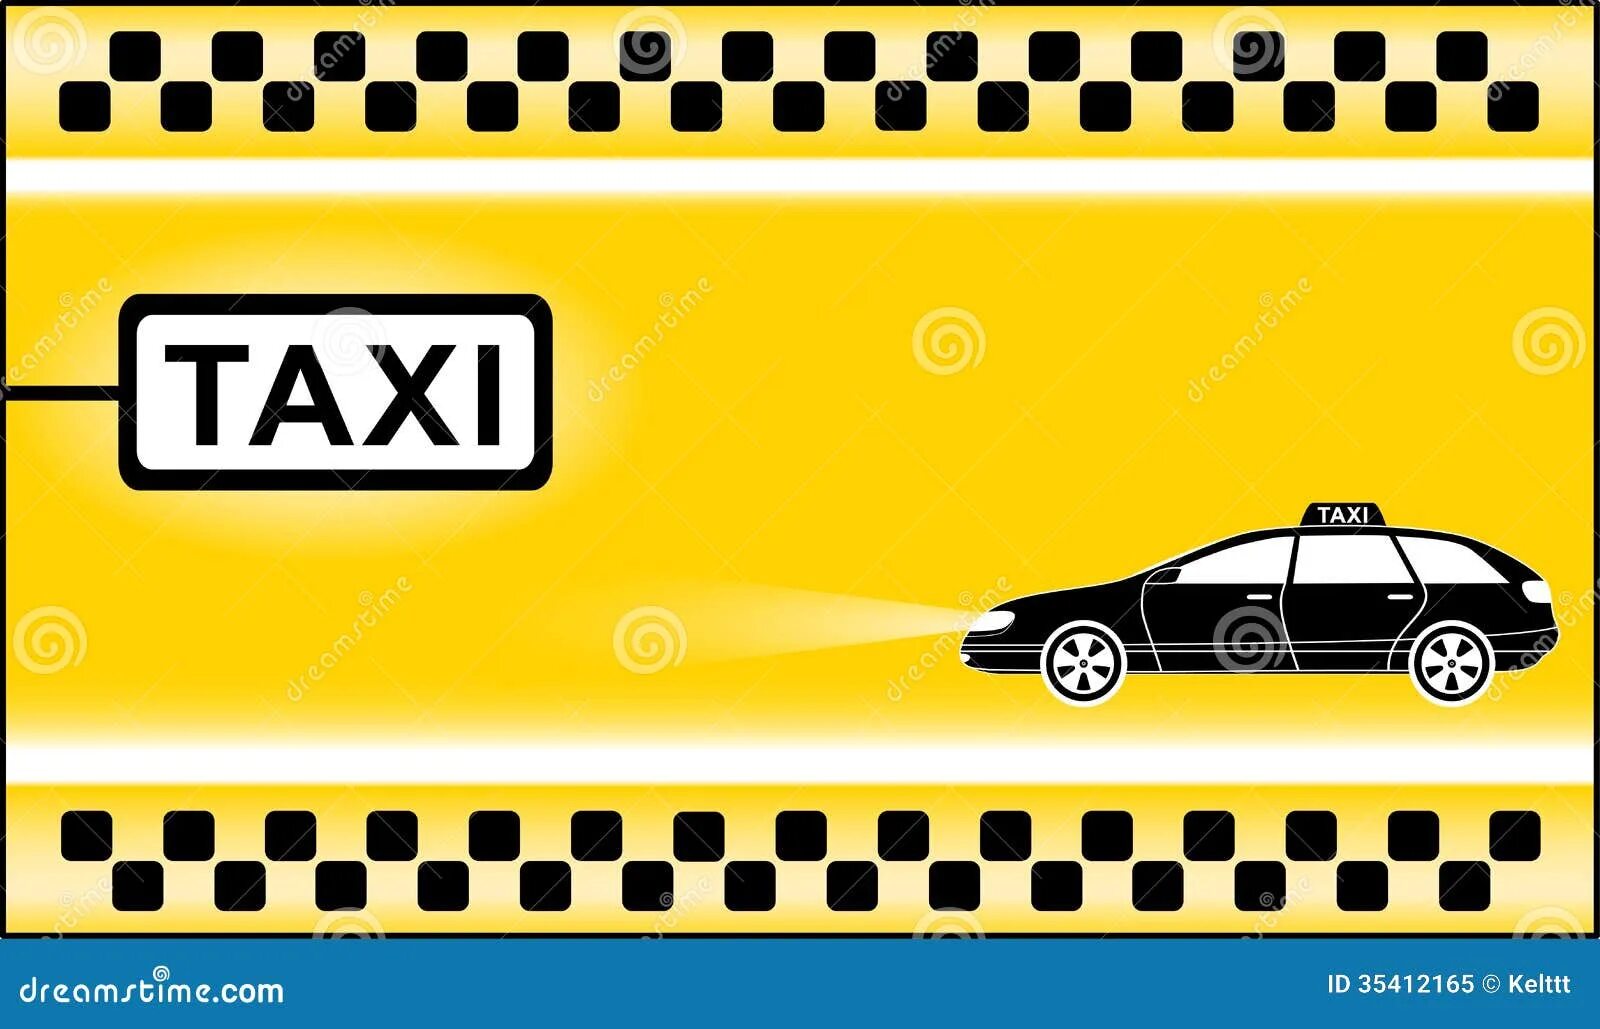 Автосервис такси. Фон для визитки такси. Такси фон. Такси Самара.